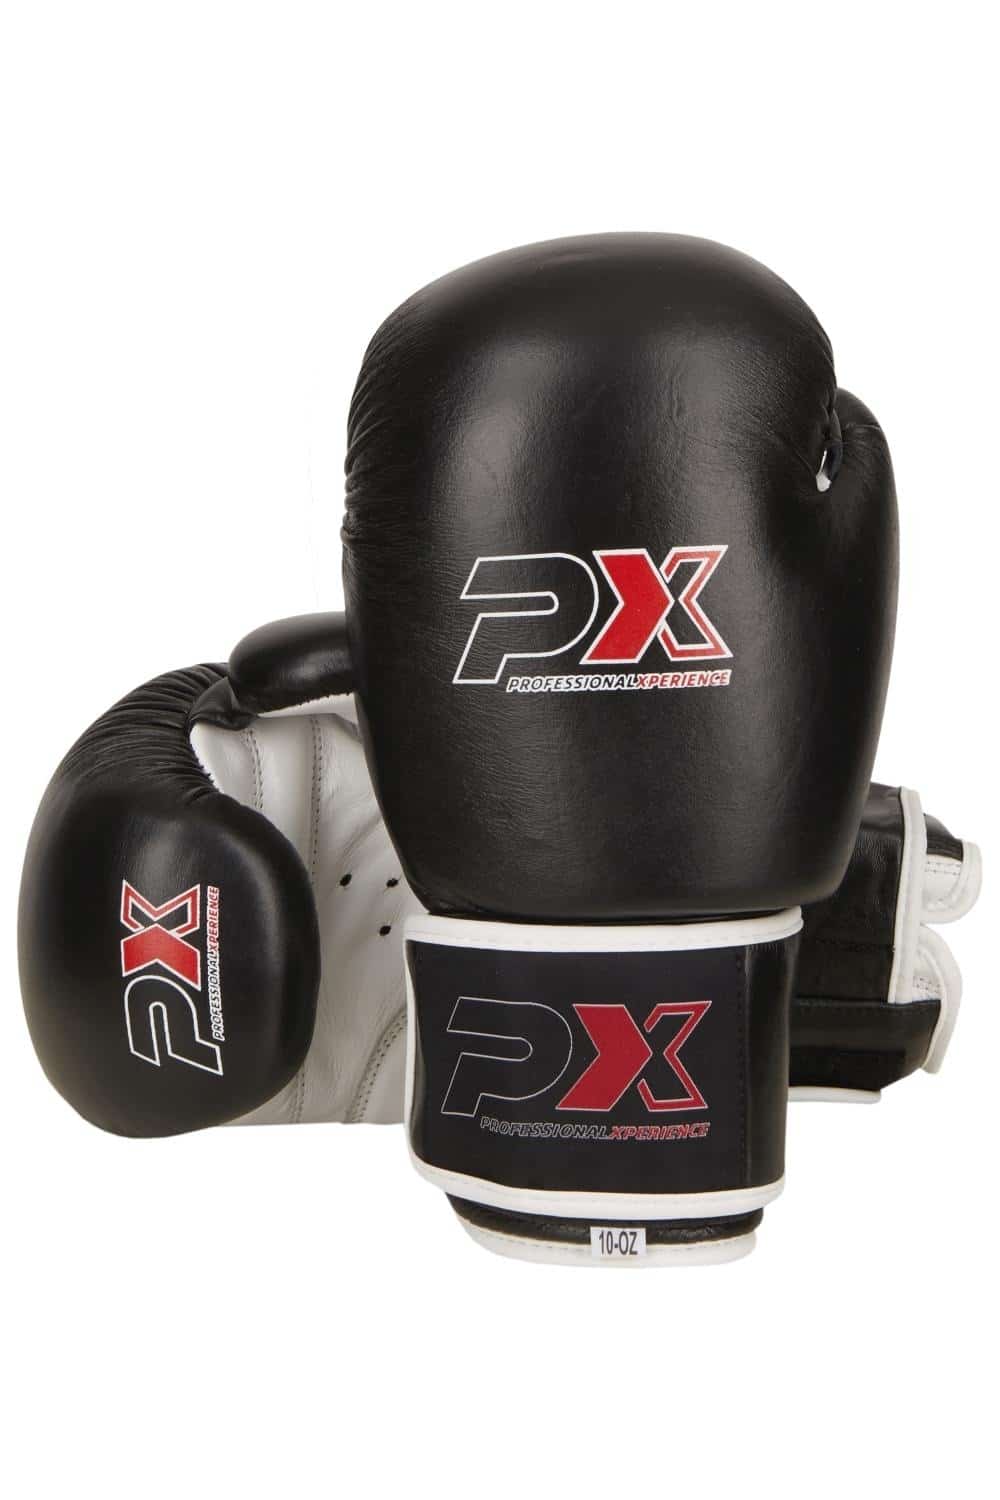 Kick-Thaiboxen Phoenix Leder Boxhandschuhe Boxen 